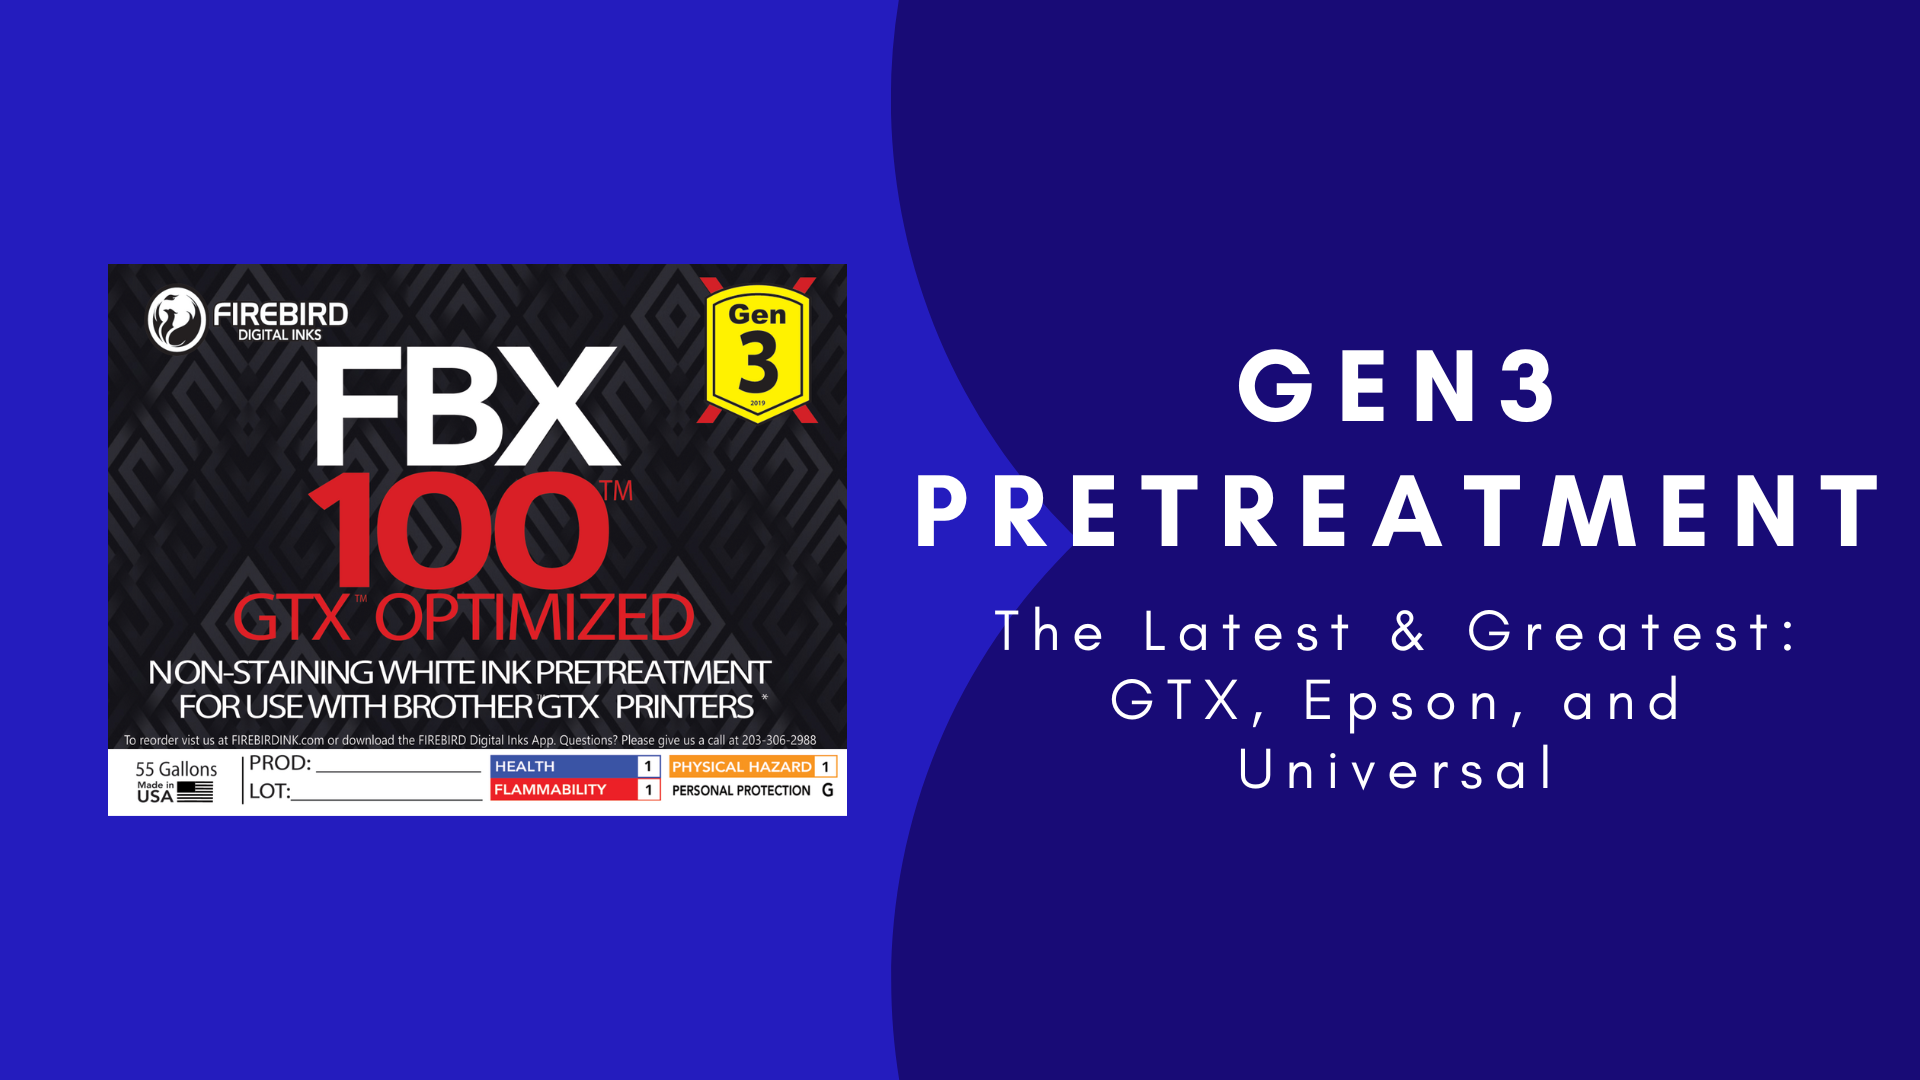 FIREBIRD Gen3 Pretreatment - The Latest & Greatest